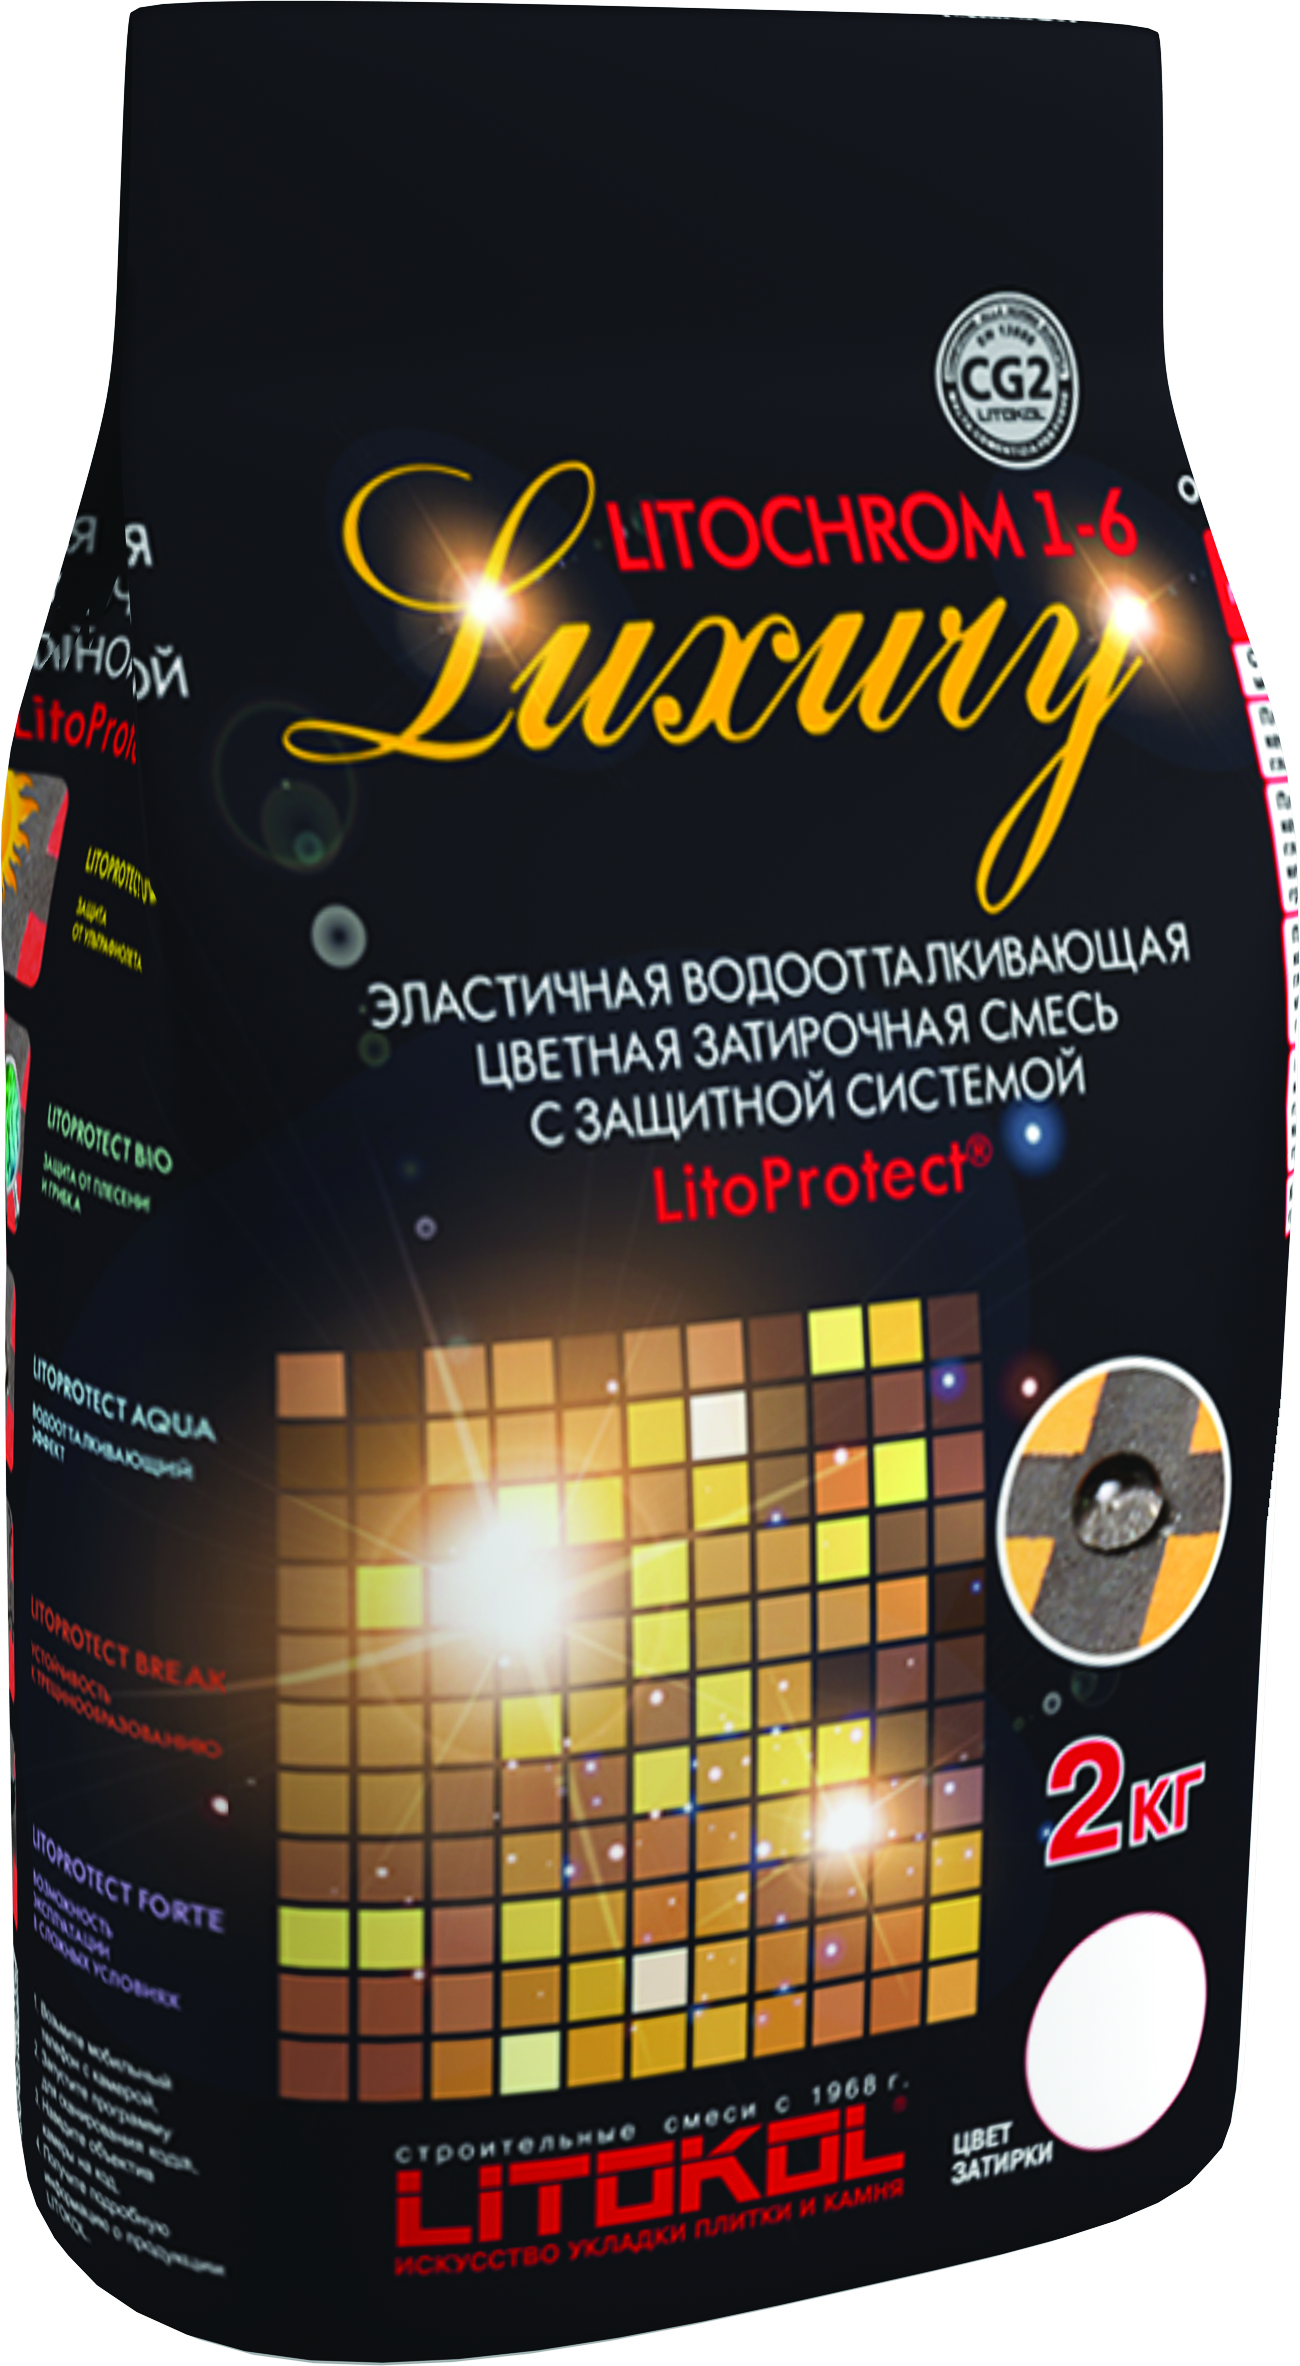 Купить Litokol Litochrom 1-6 Luxury C.130, 2 кг